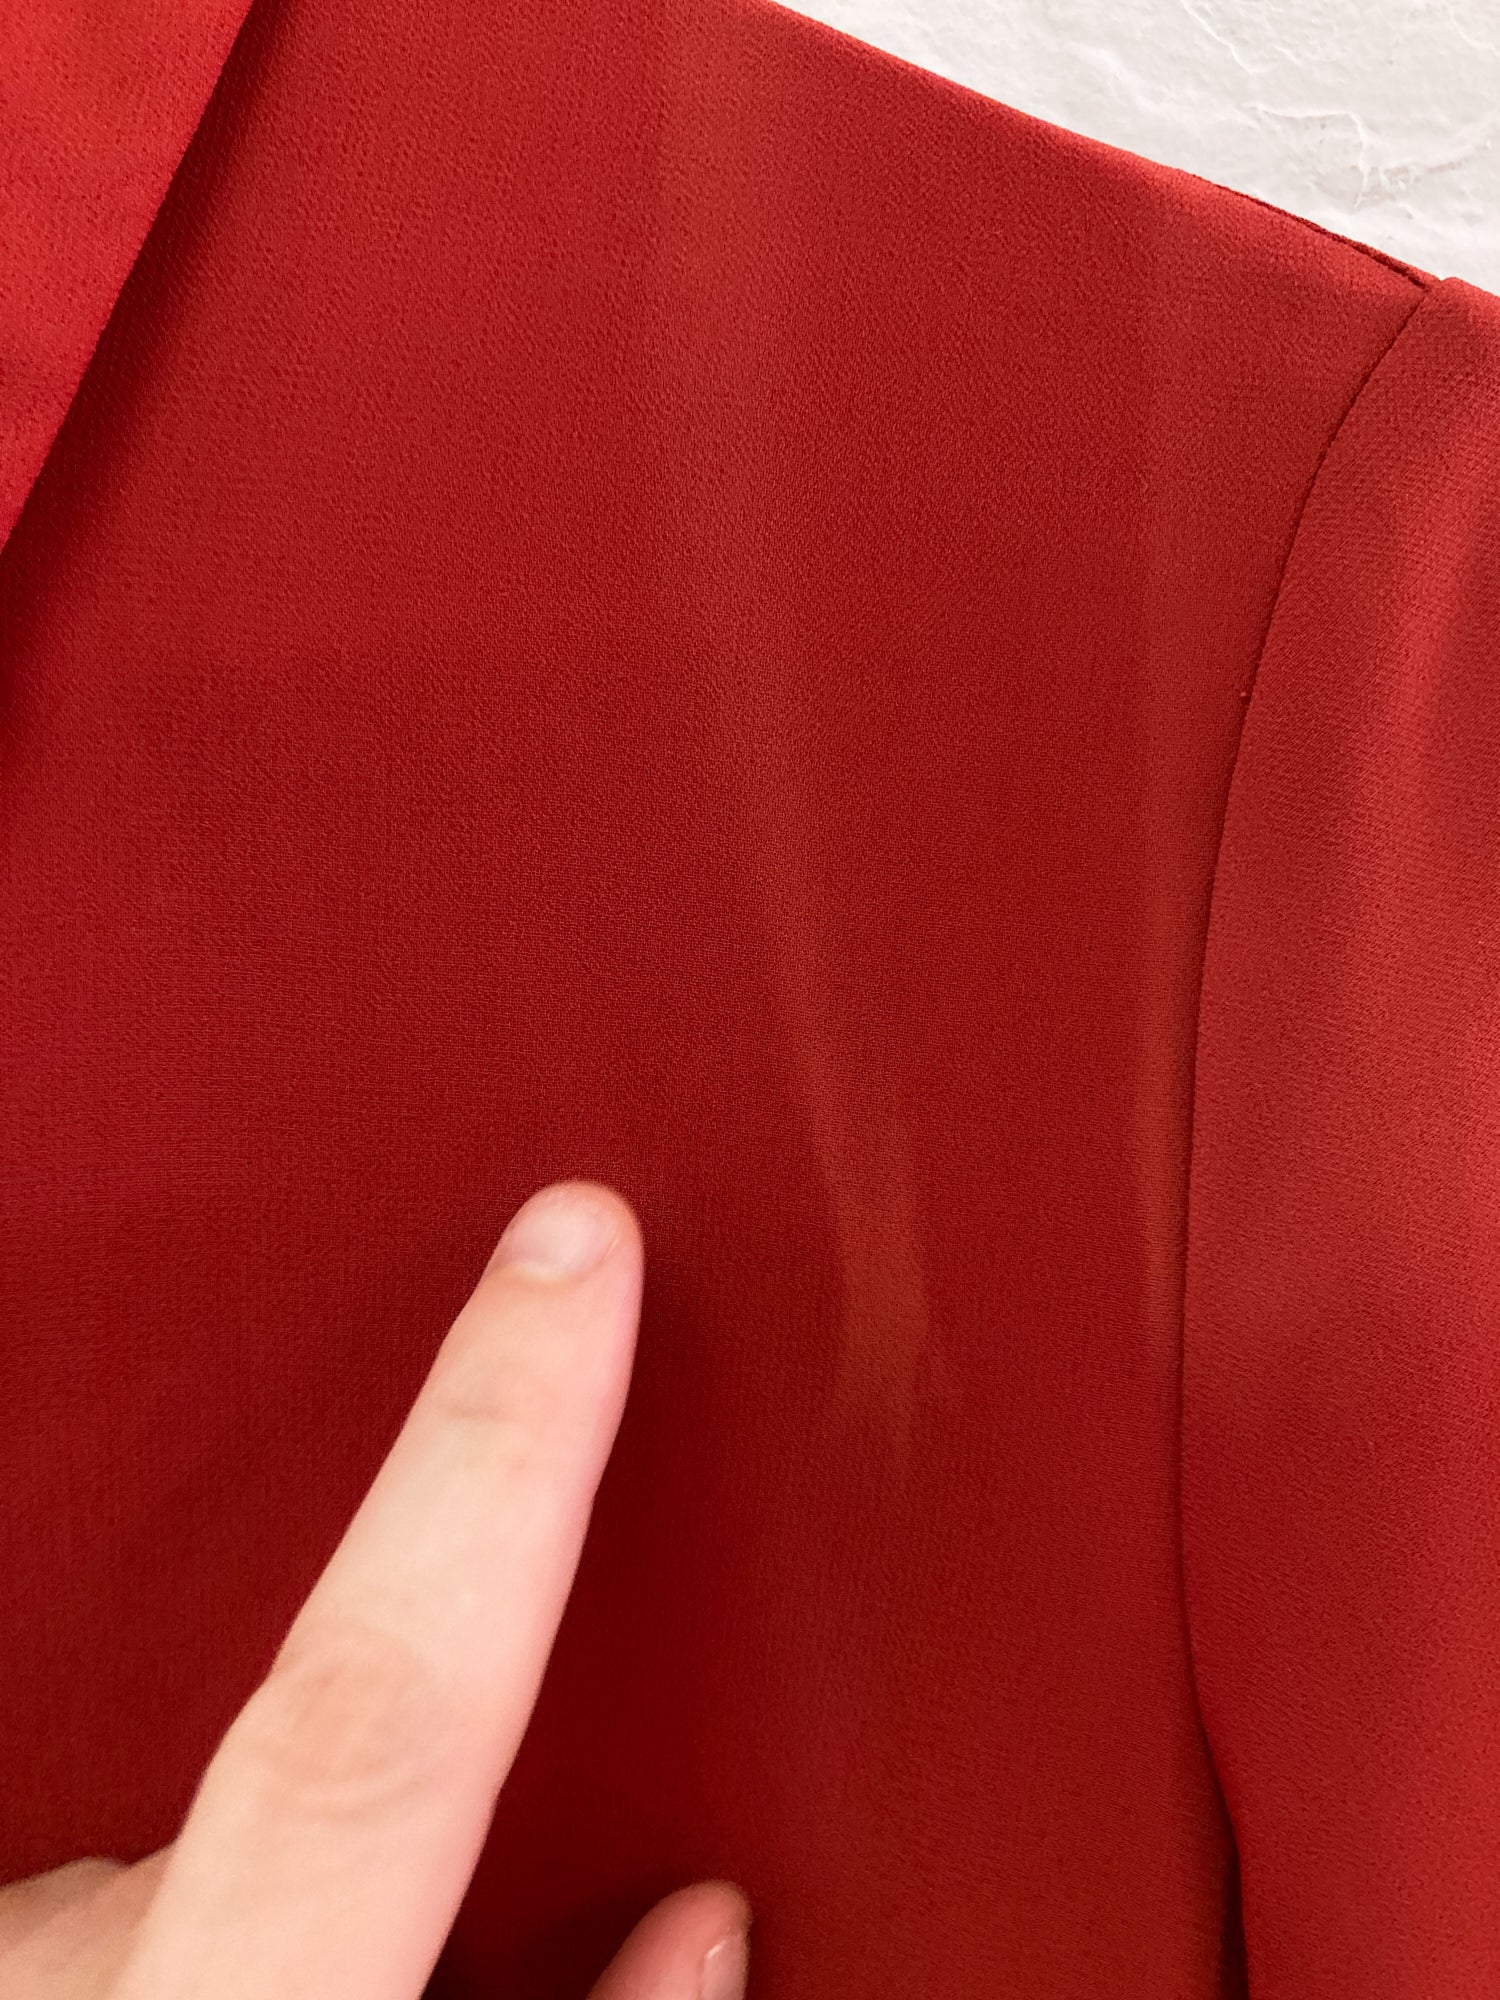 Comme des Garcons 1996 burgundy polyester crepe short sleeve darted shirt - S M